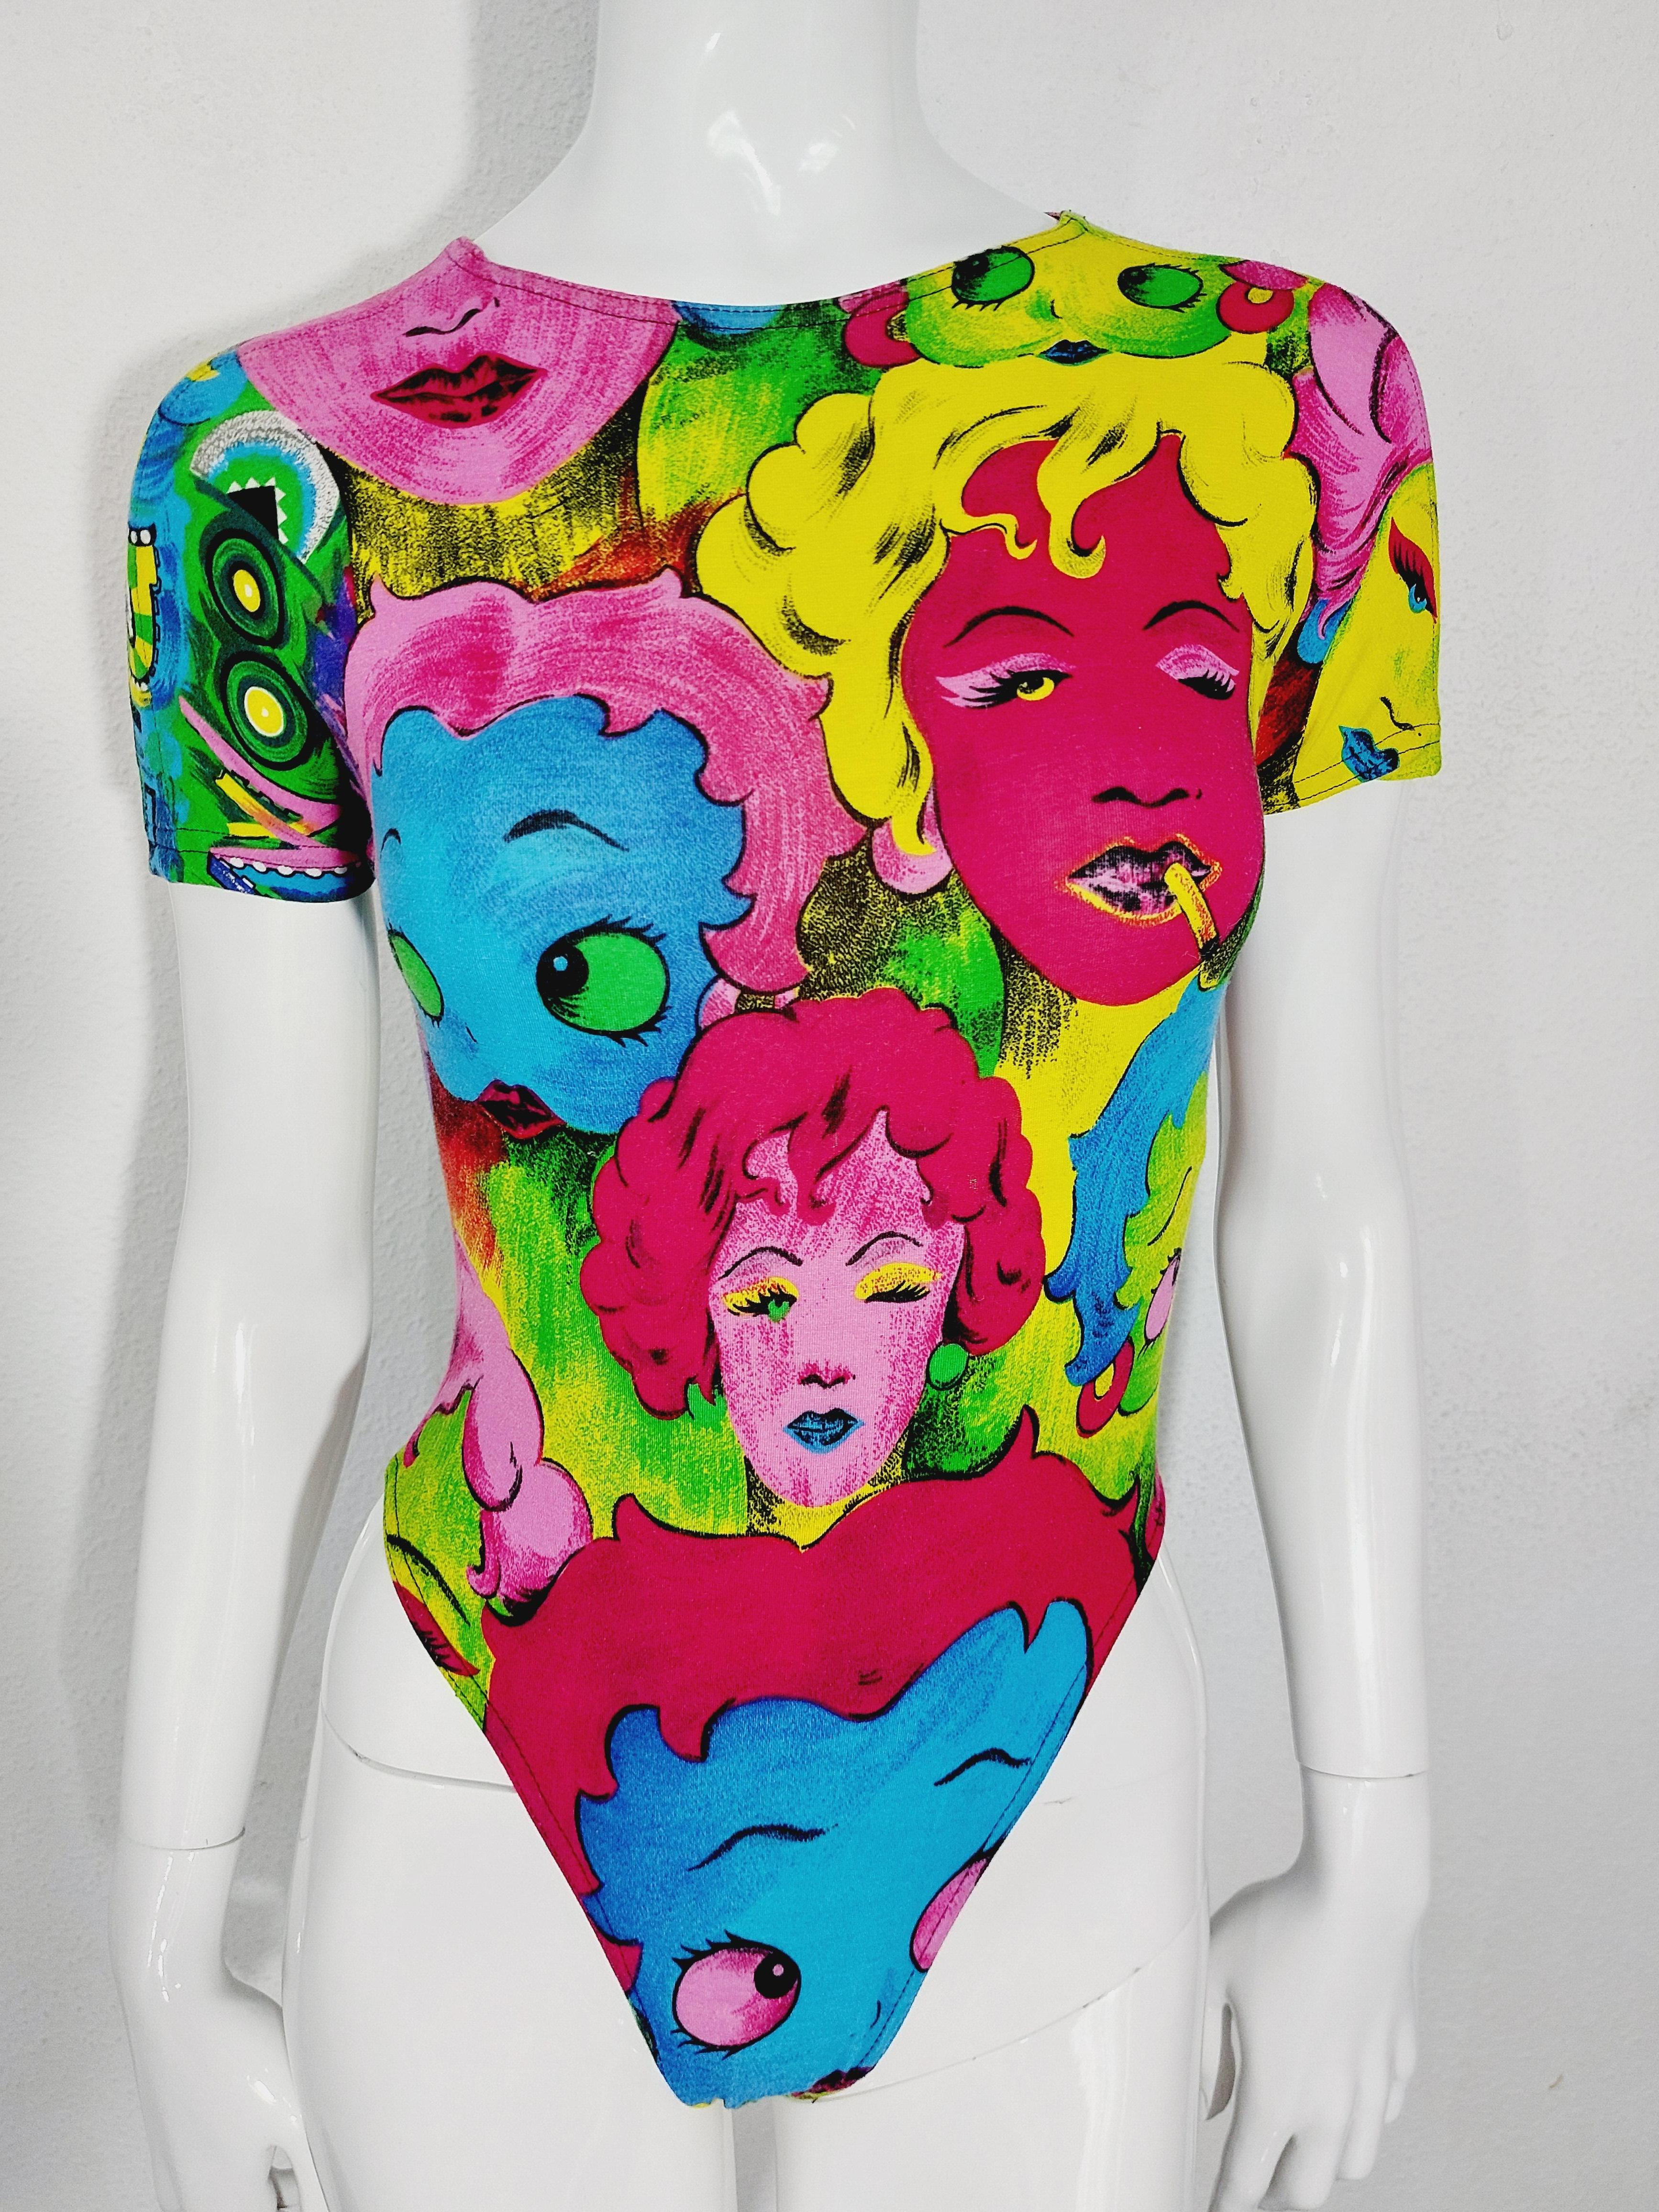 GIANNI VERSACE Andy Warhol Pop Art Marilyn Monroe Betty Boop SS91 Bodyuit Body For Sale 9